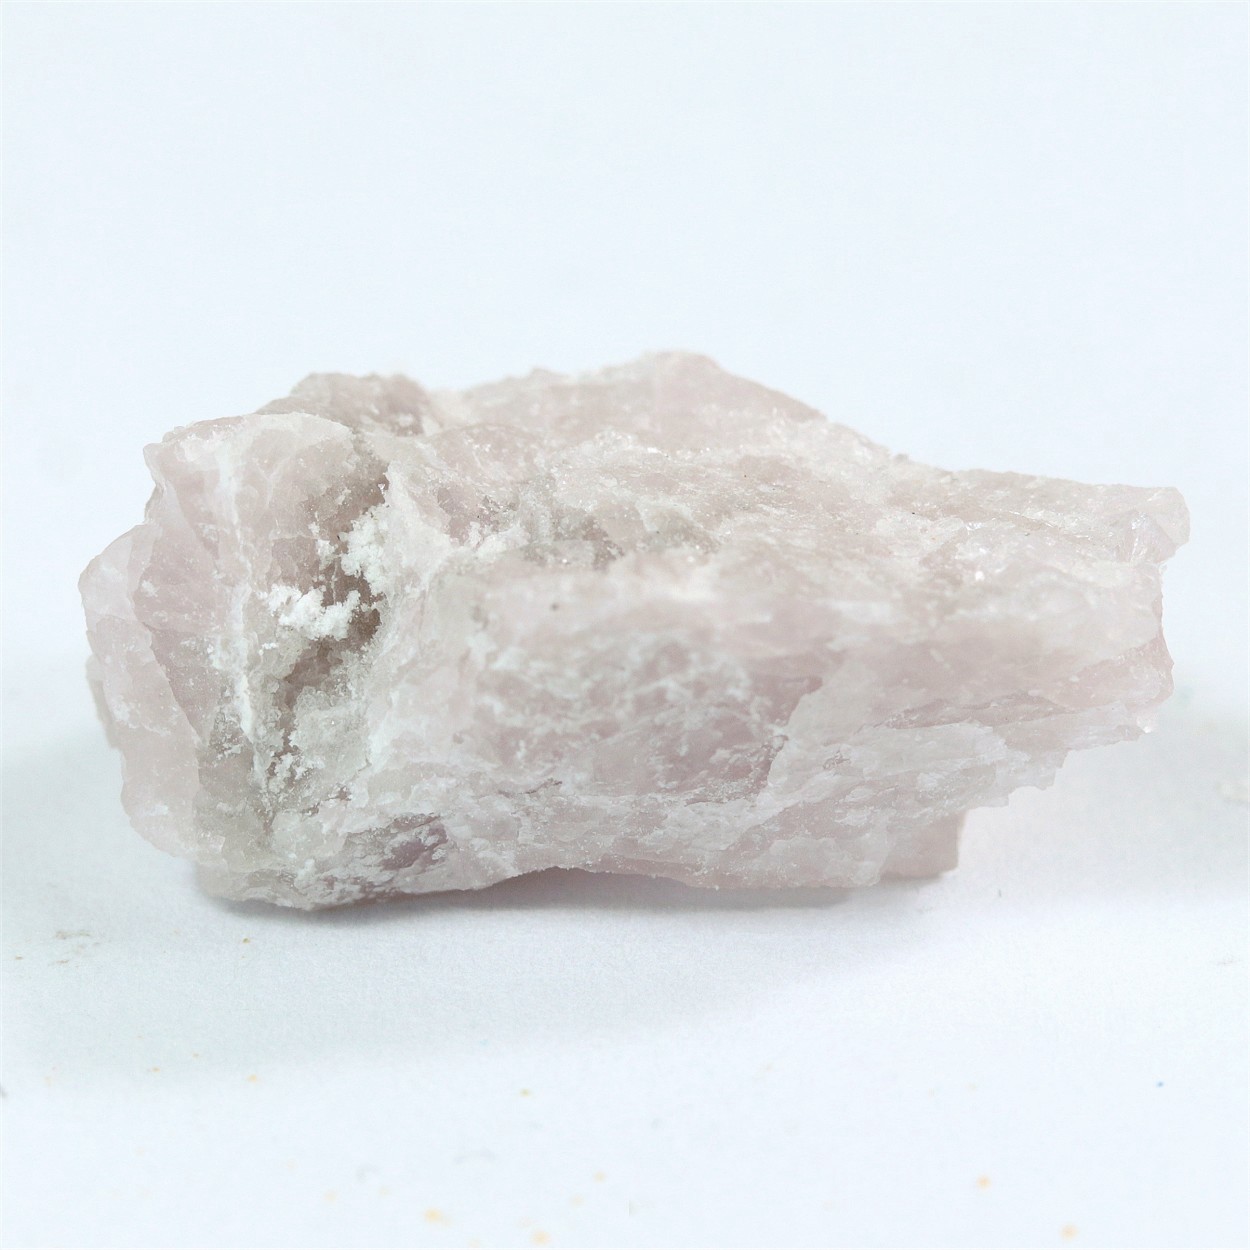 Natrophosphate With Ussingite